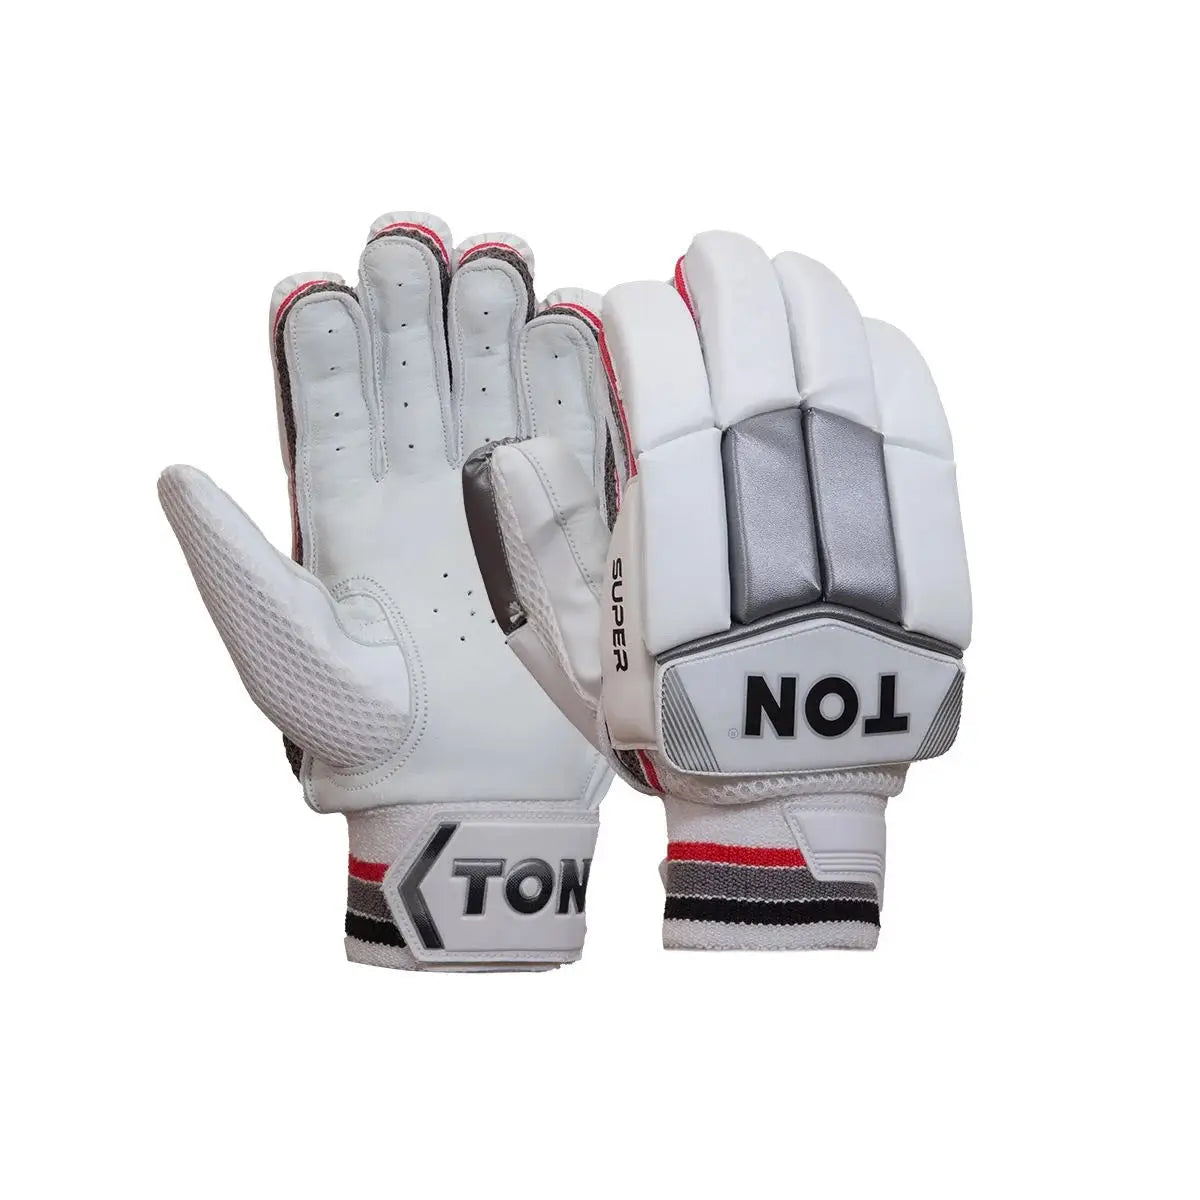 SS TON Super Cricket Batting Gloves- Premium Quality Leather - Men RH - GLOVE - BATTING